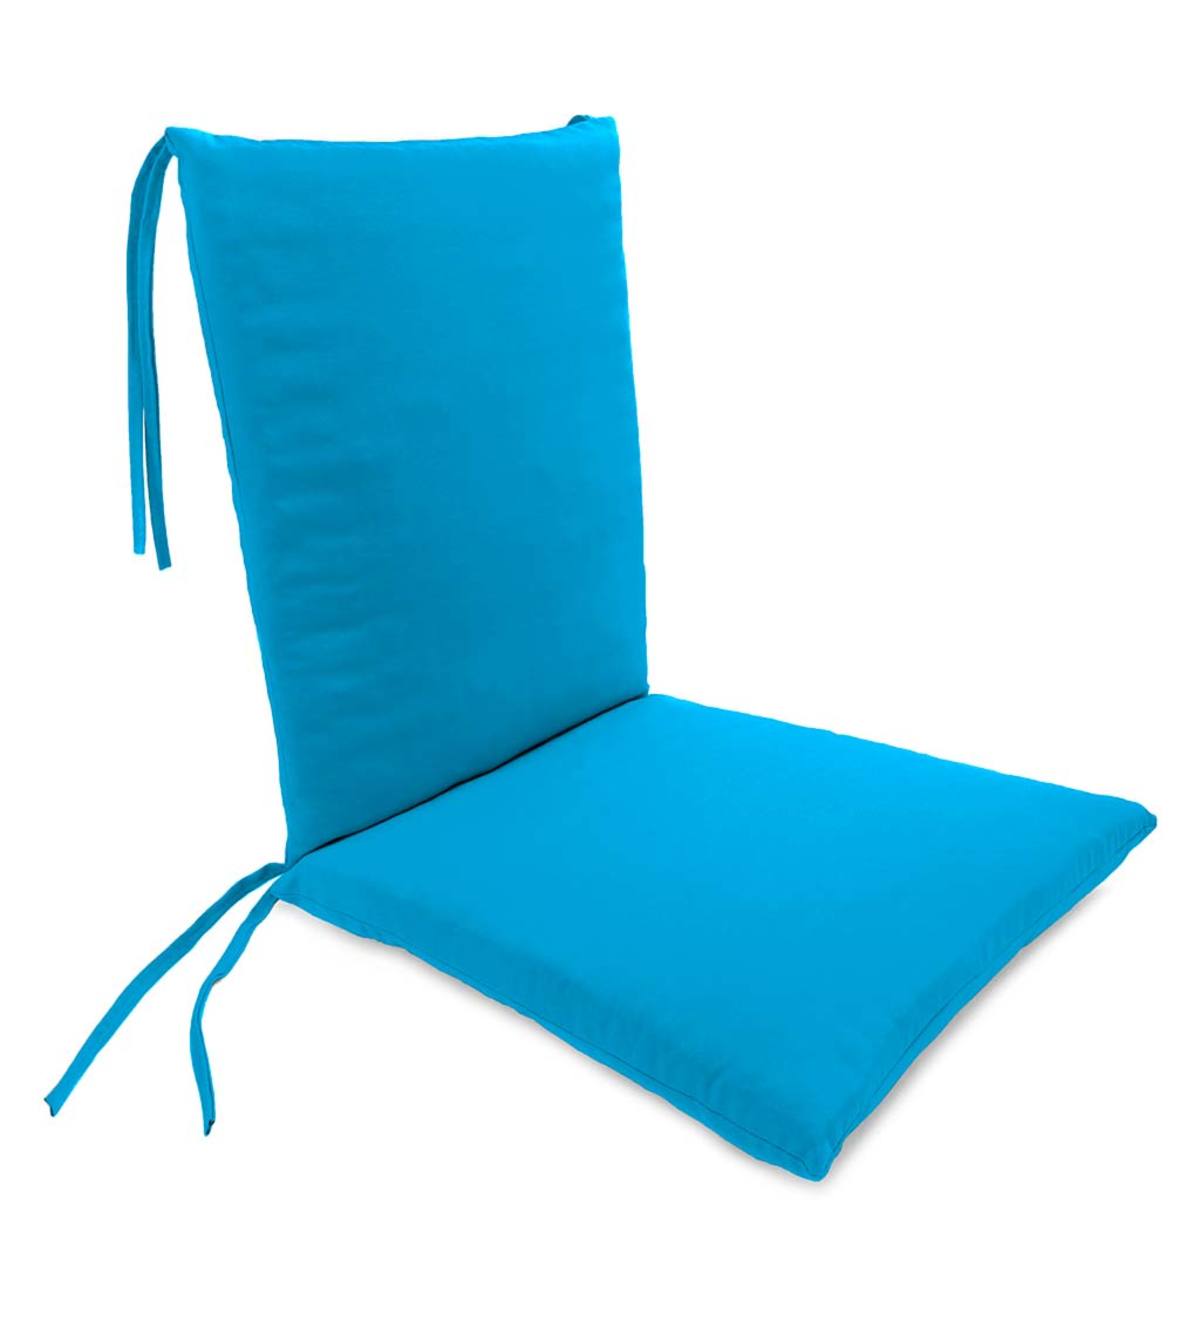 Rocking Chair Cushions, Sunbrella Outdoor Cushions For Rocking Chairs